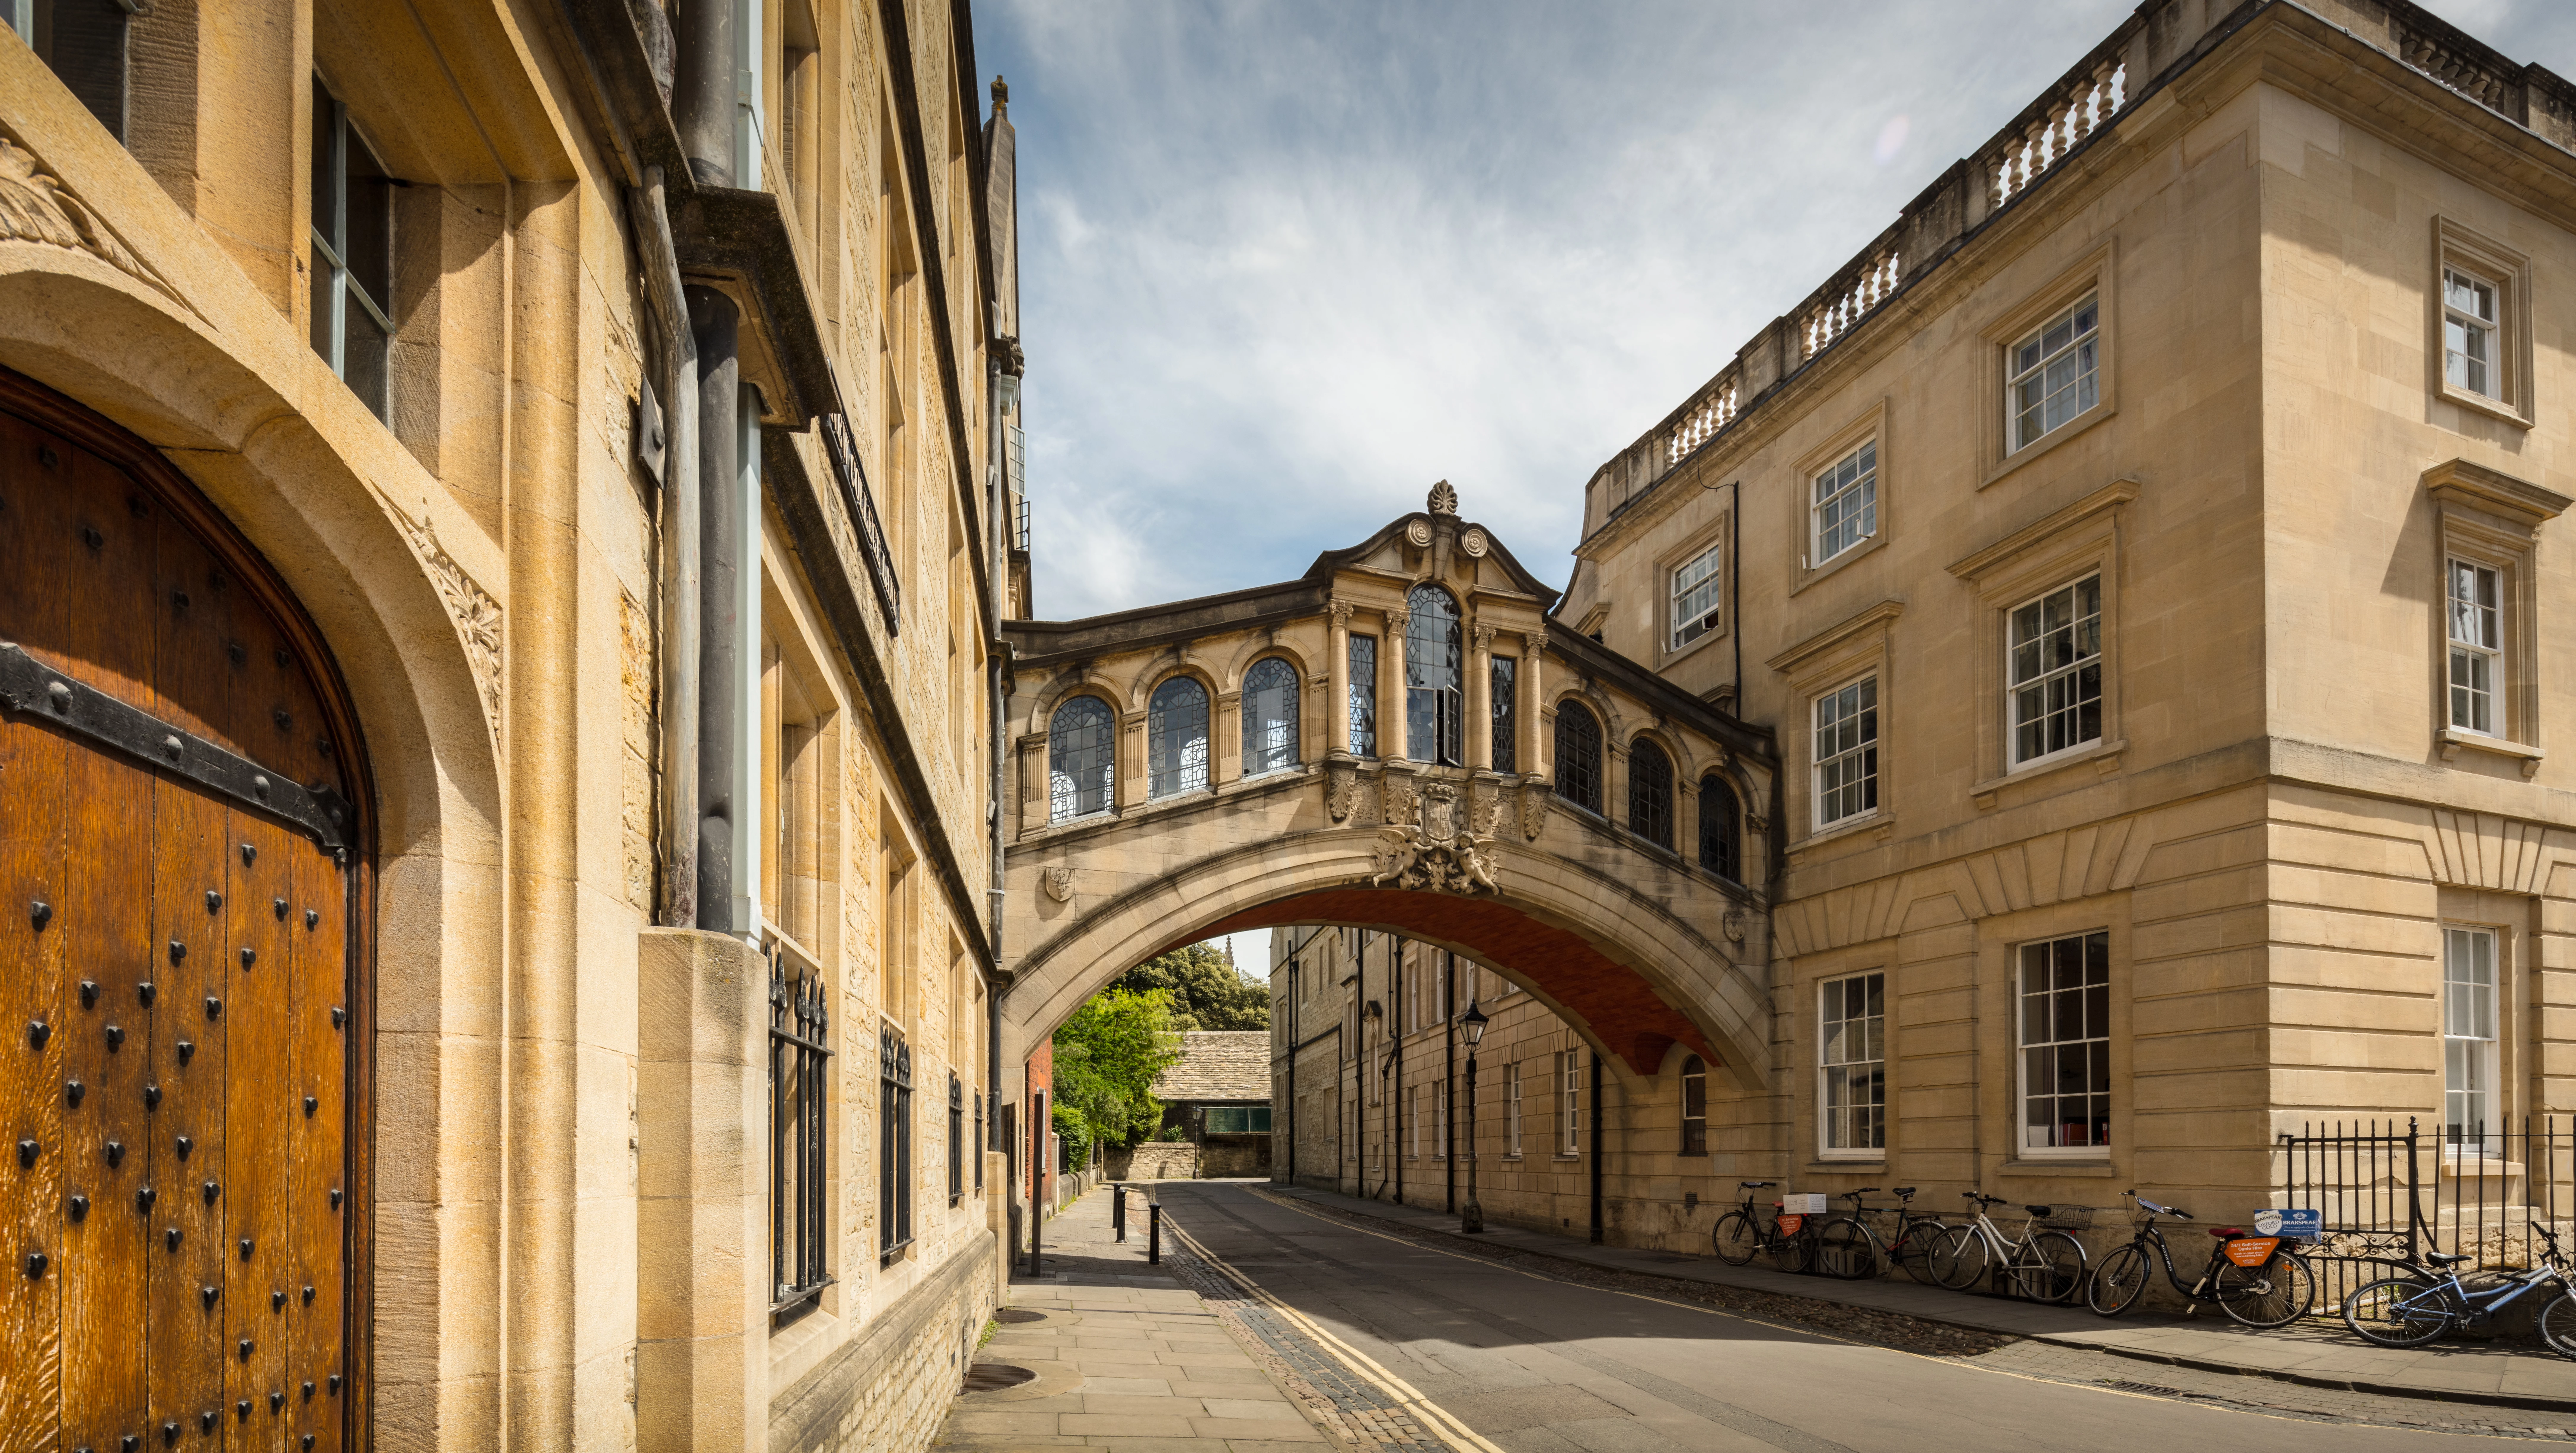 University of Oxford The Bridge of Sighs